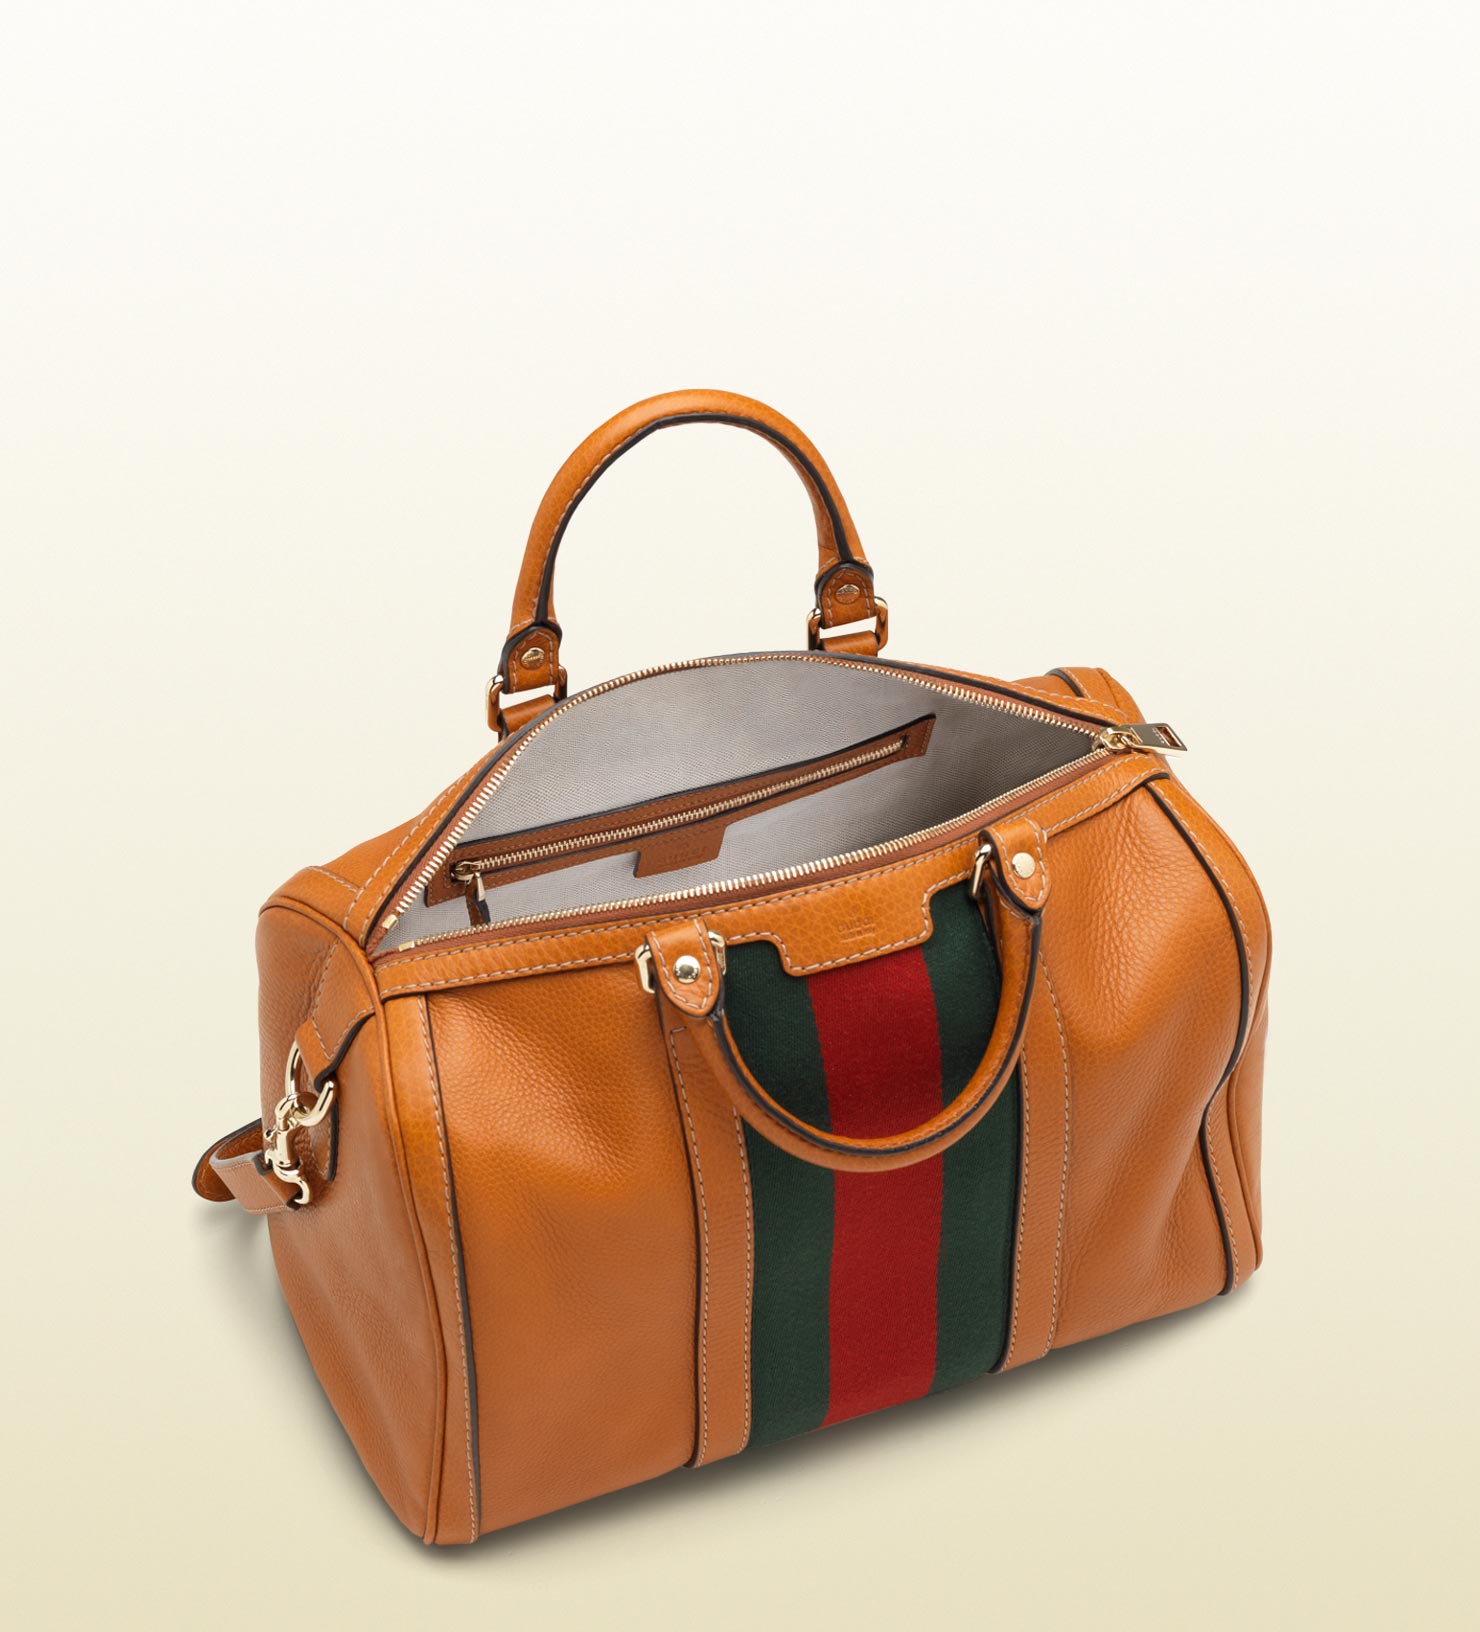 Lyst - Gucci Vintage Web Boston Bag in Brown